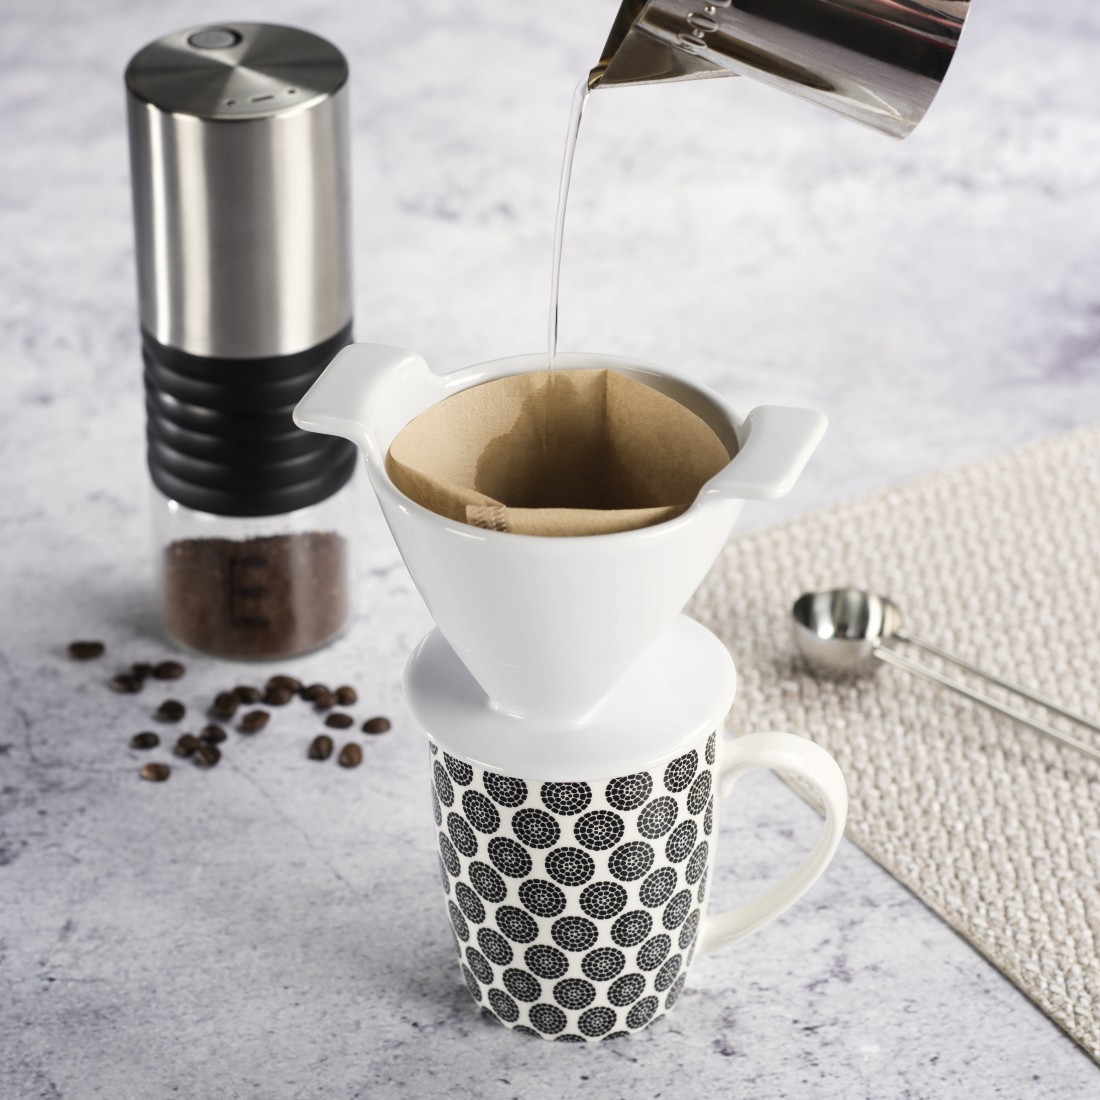 awx2 High-Res Appliance 2 - Xavax, Porcelain Coffee Filter, size 2, white